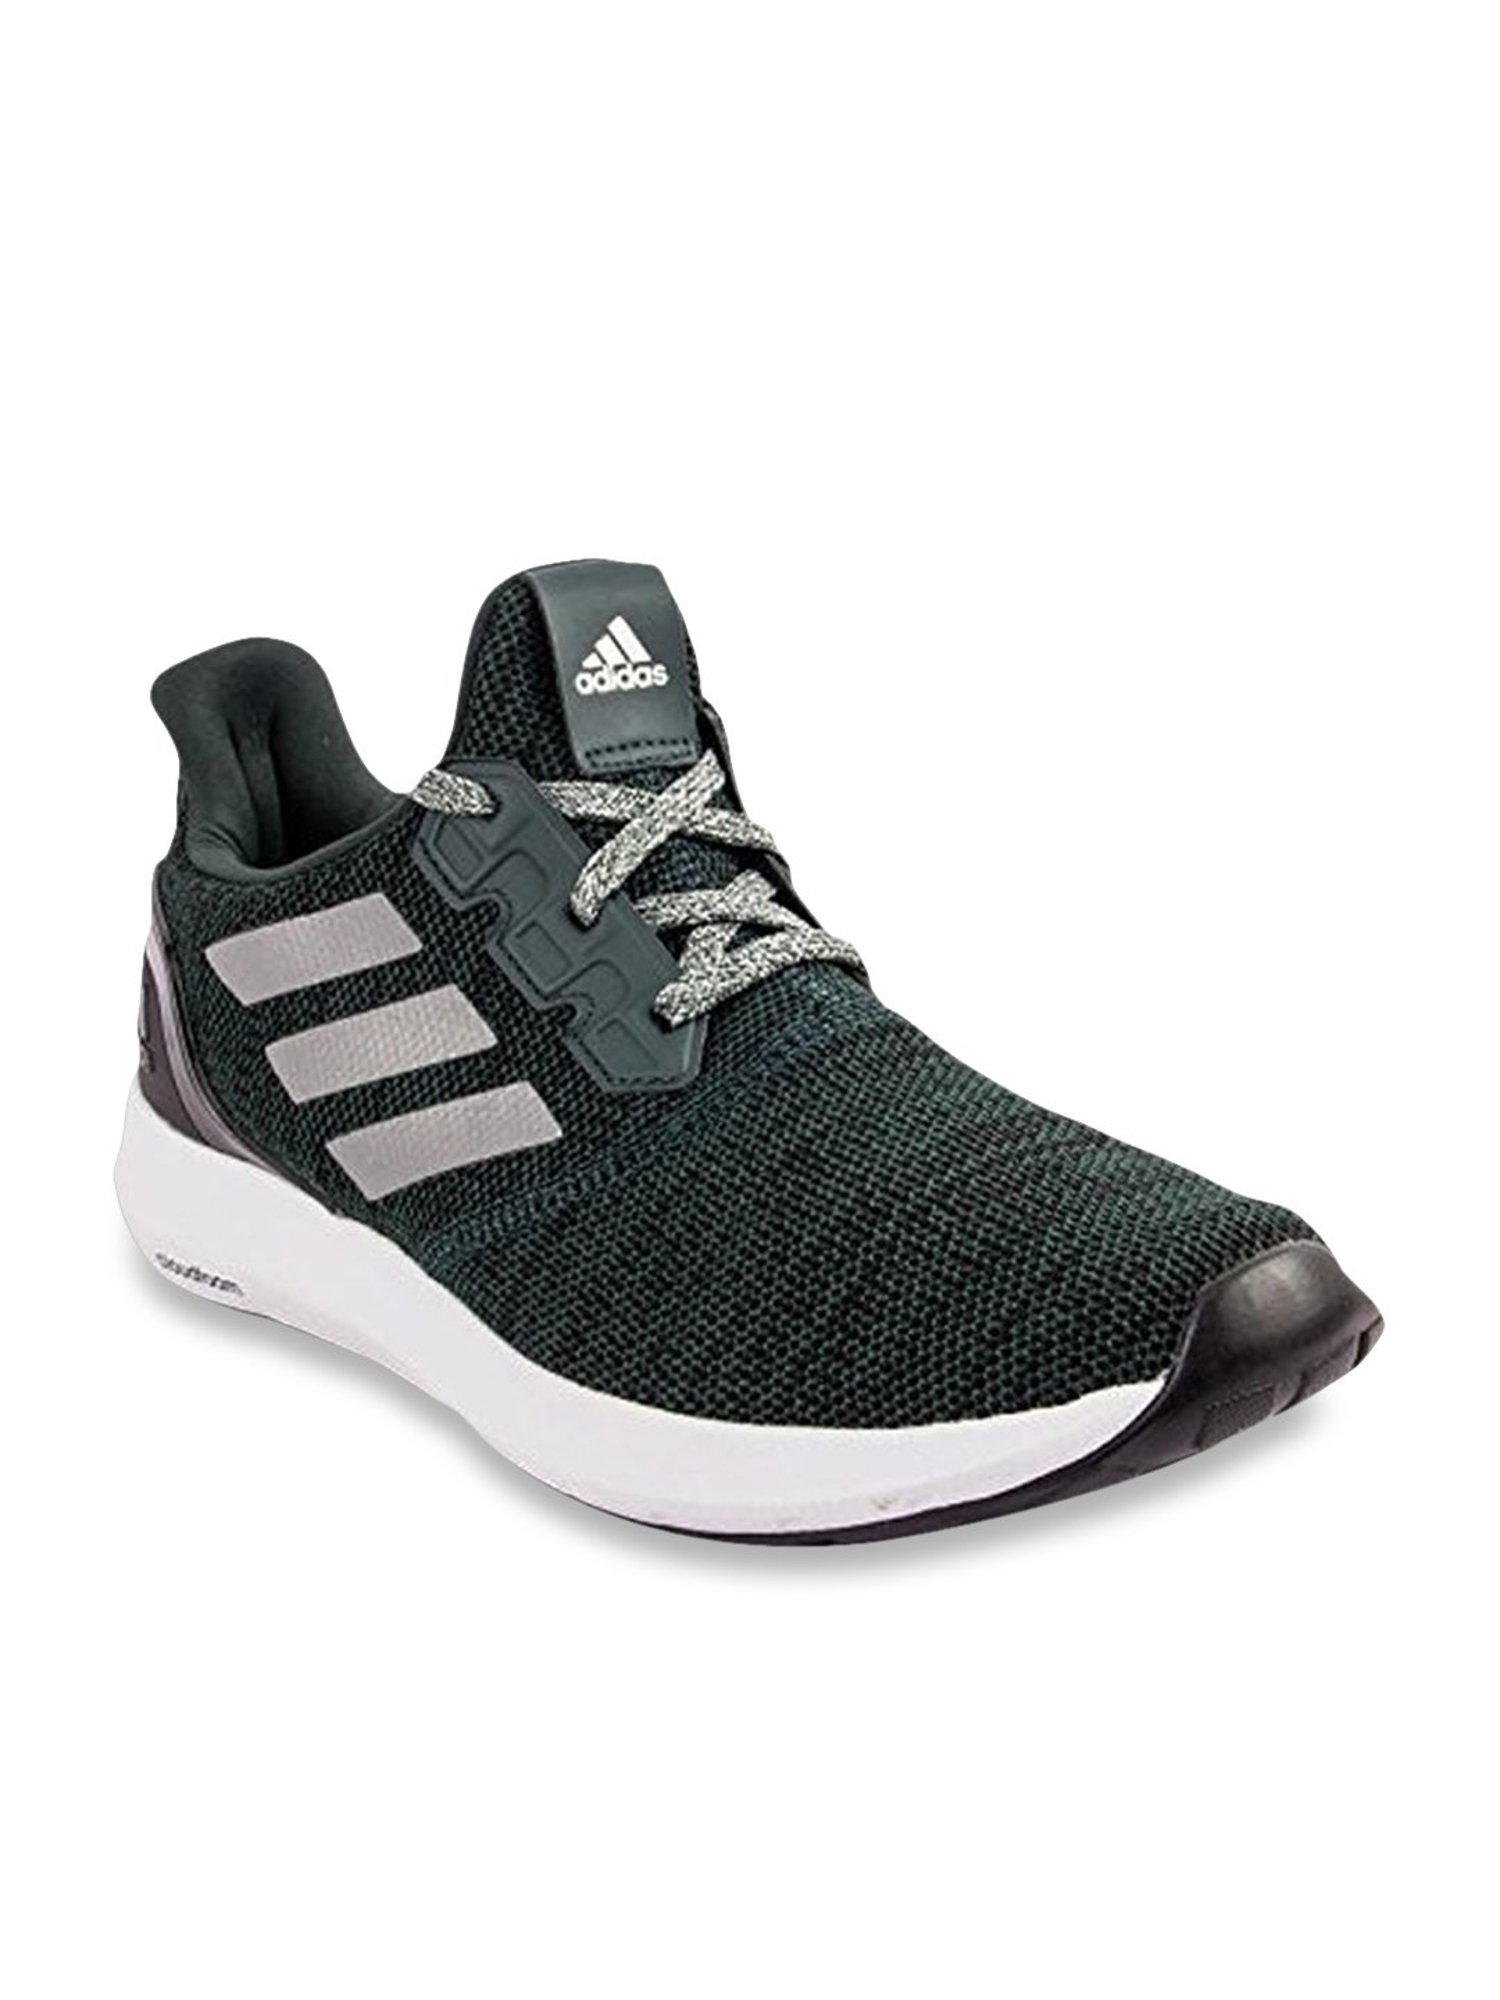 adidas zeta 1. green running shoes